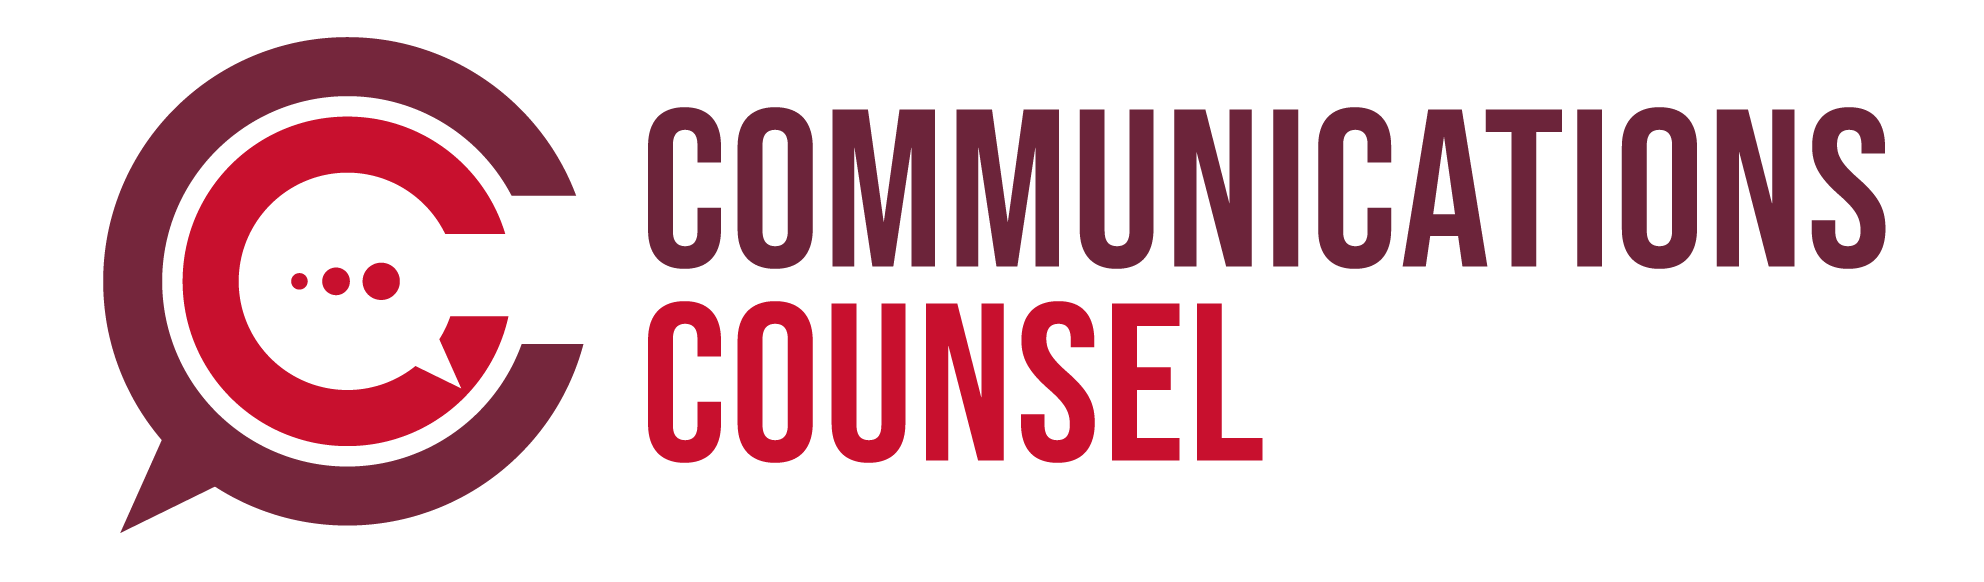 Communications Counsel